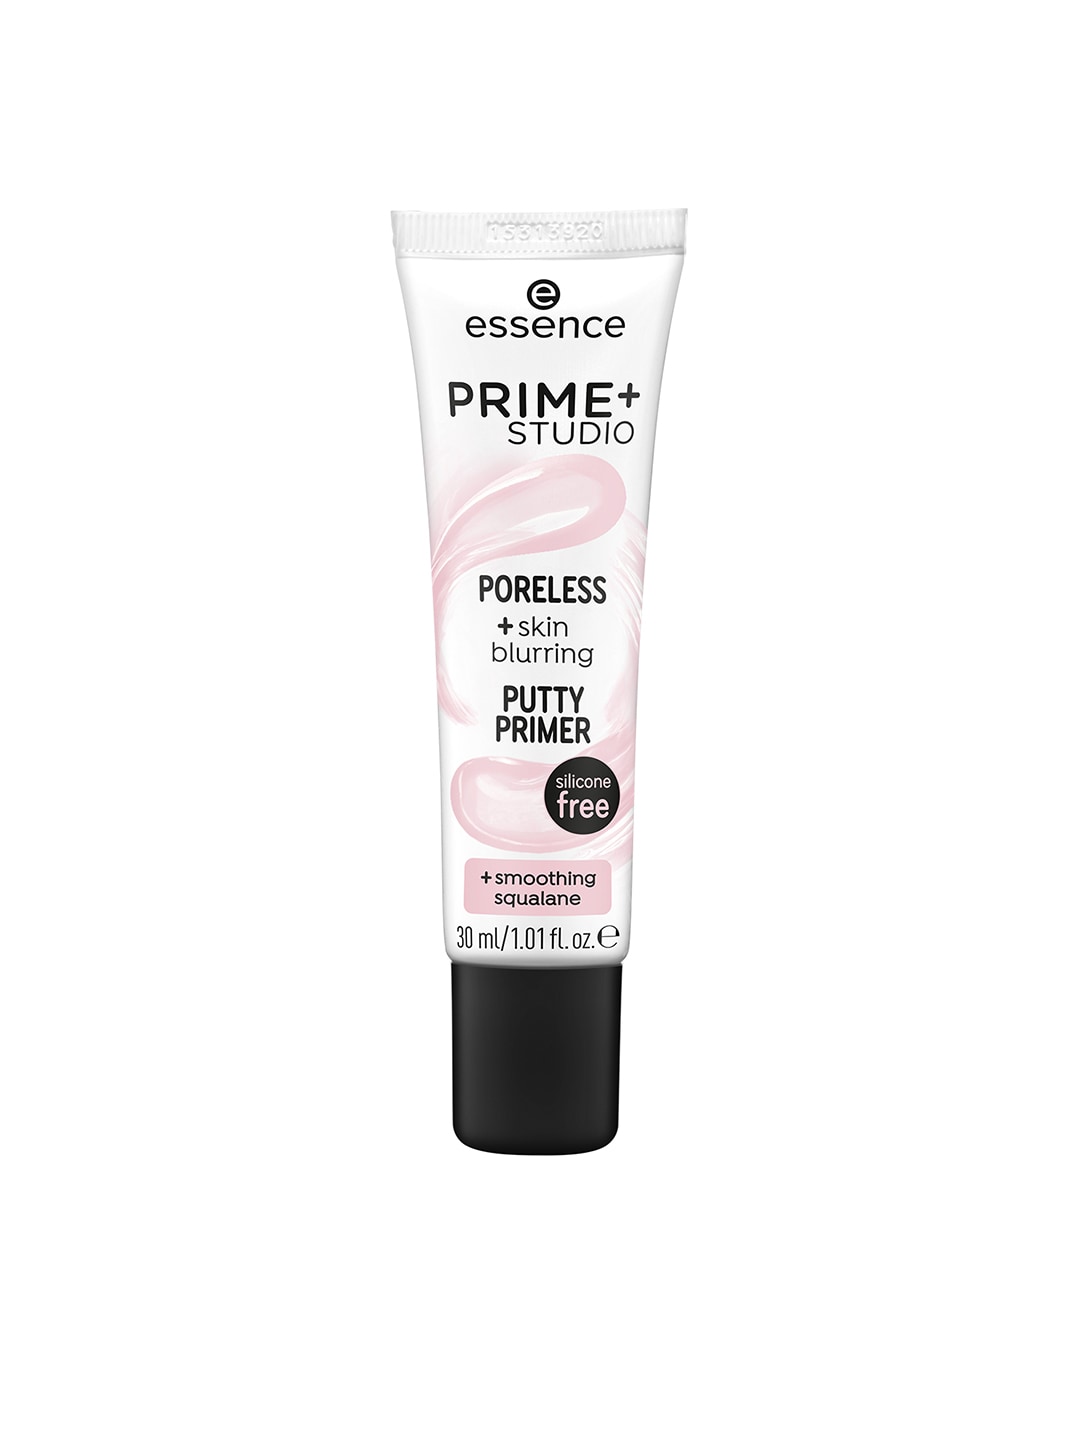 essence PRIME+ STUDIO PORELESS +Skin Blurring PUTTY PRIMER 30ml Price in India